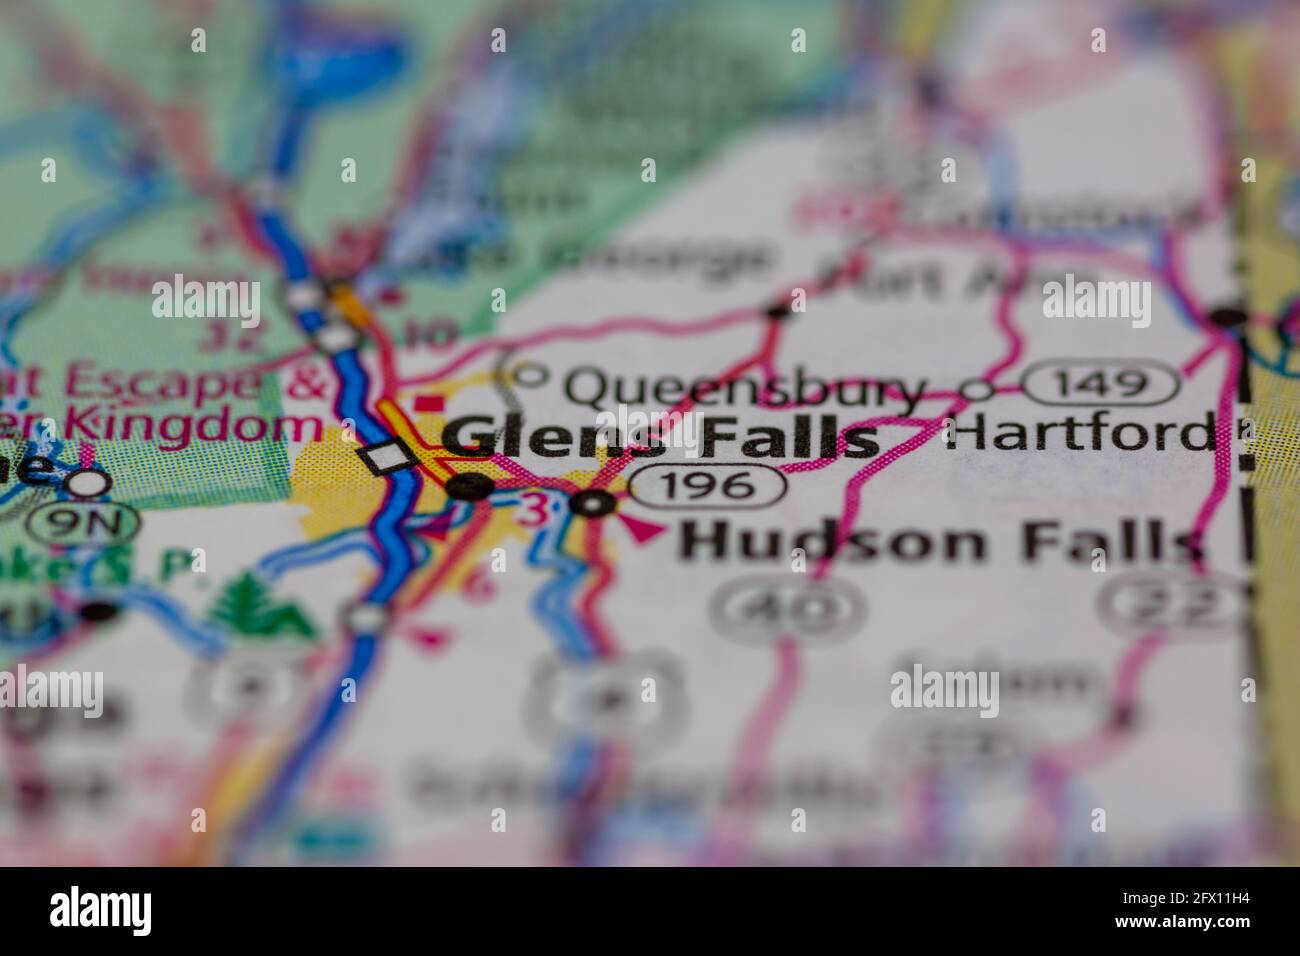 Glens Falls New York USA aparece en un mapa geográfico o mapa de carreteras Foto de stock